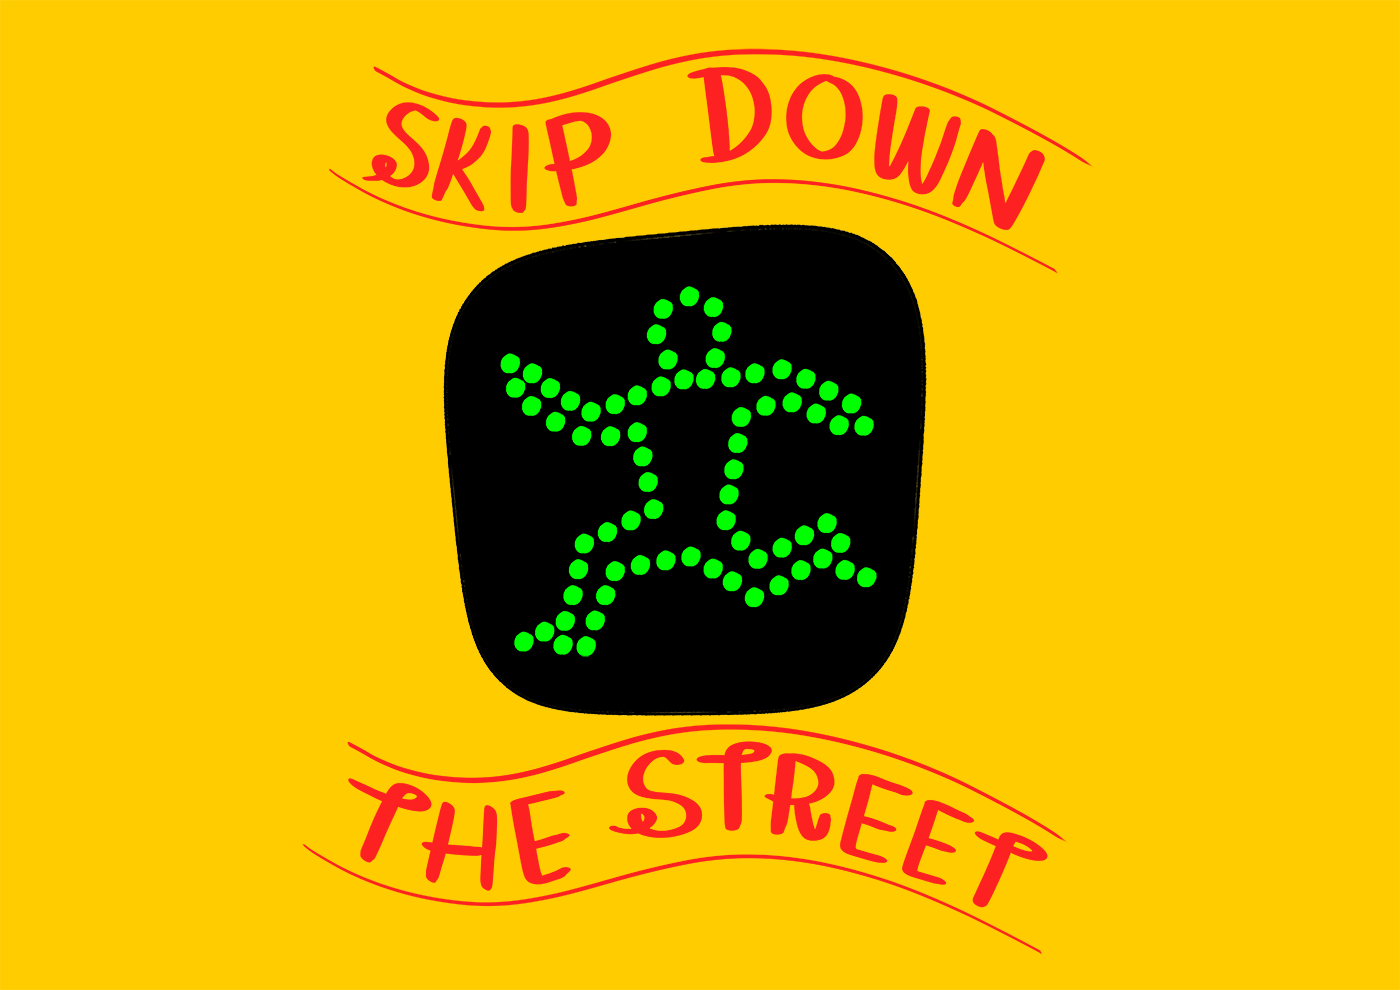 Skip  down the street